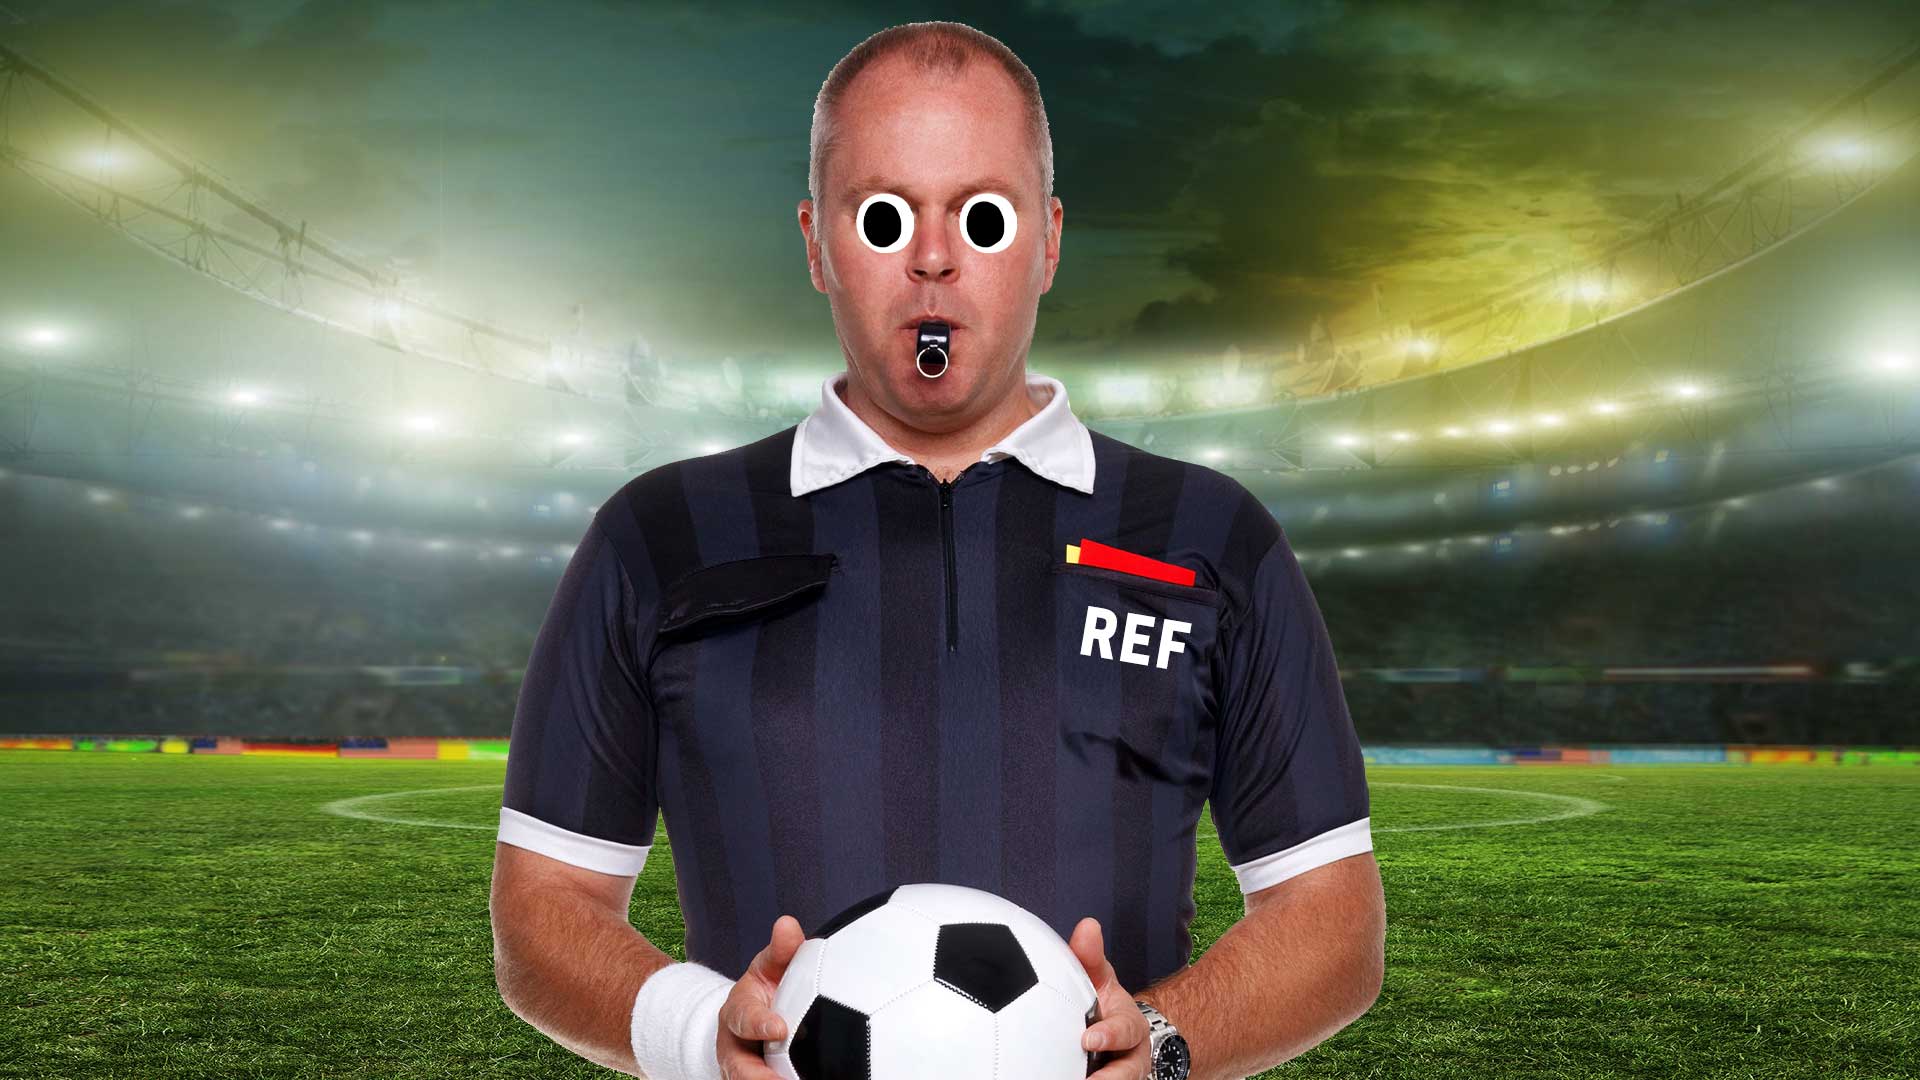 A football referee